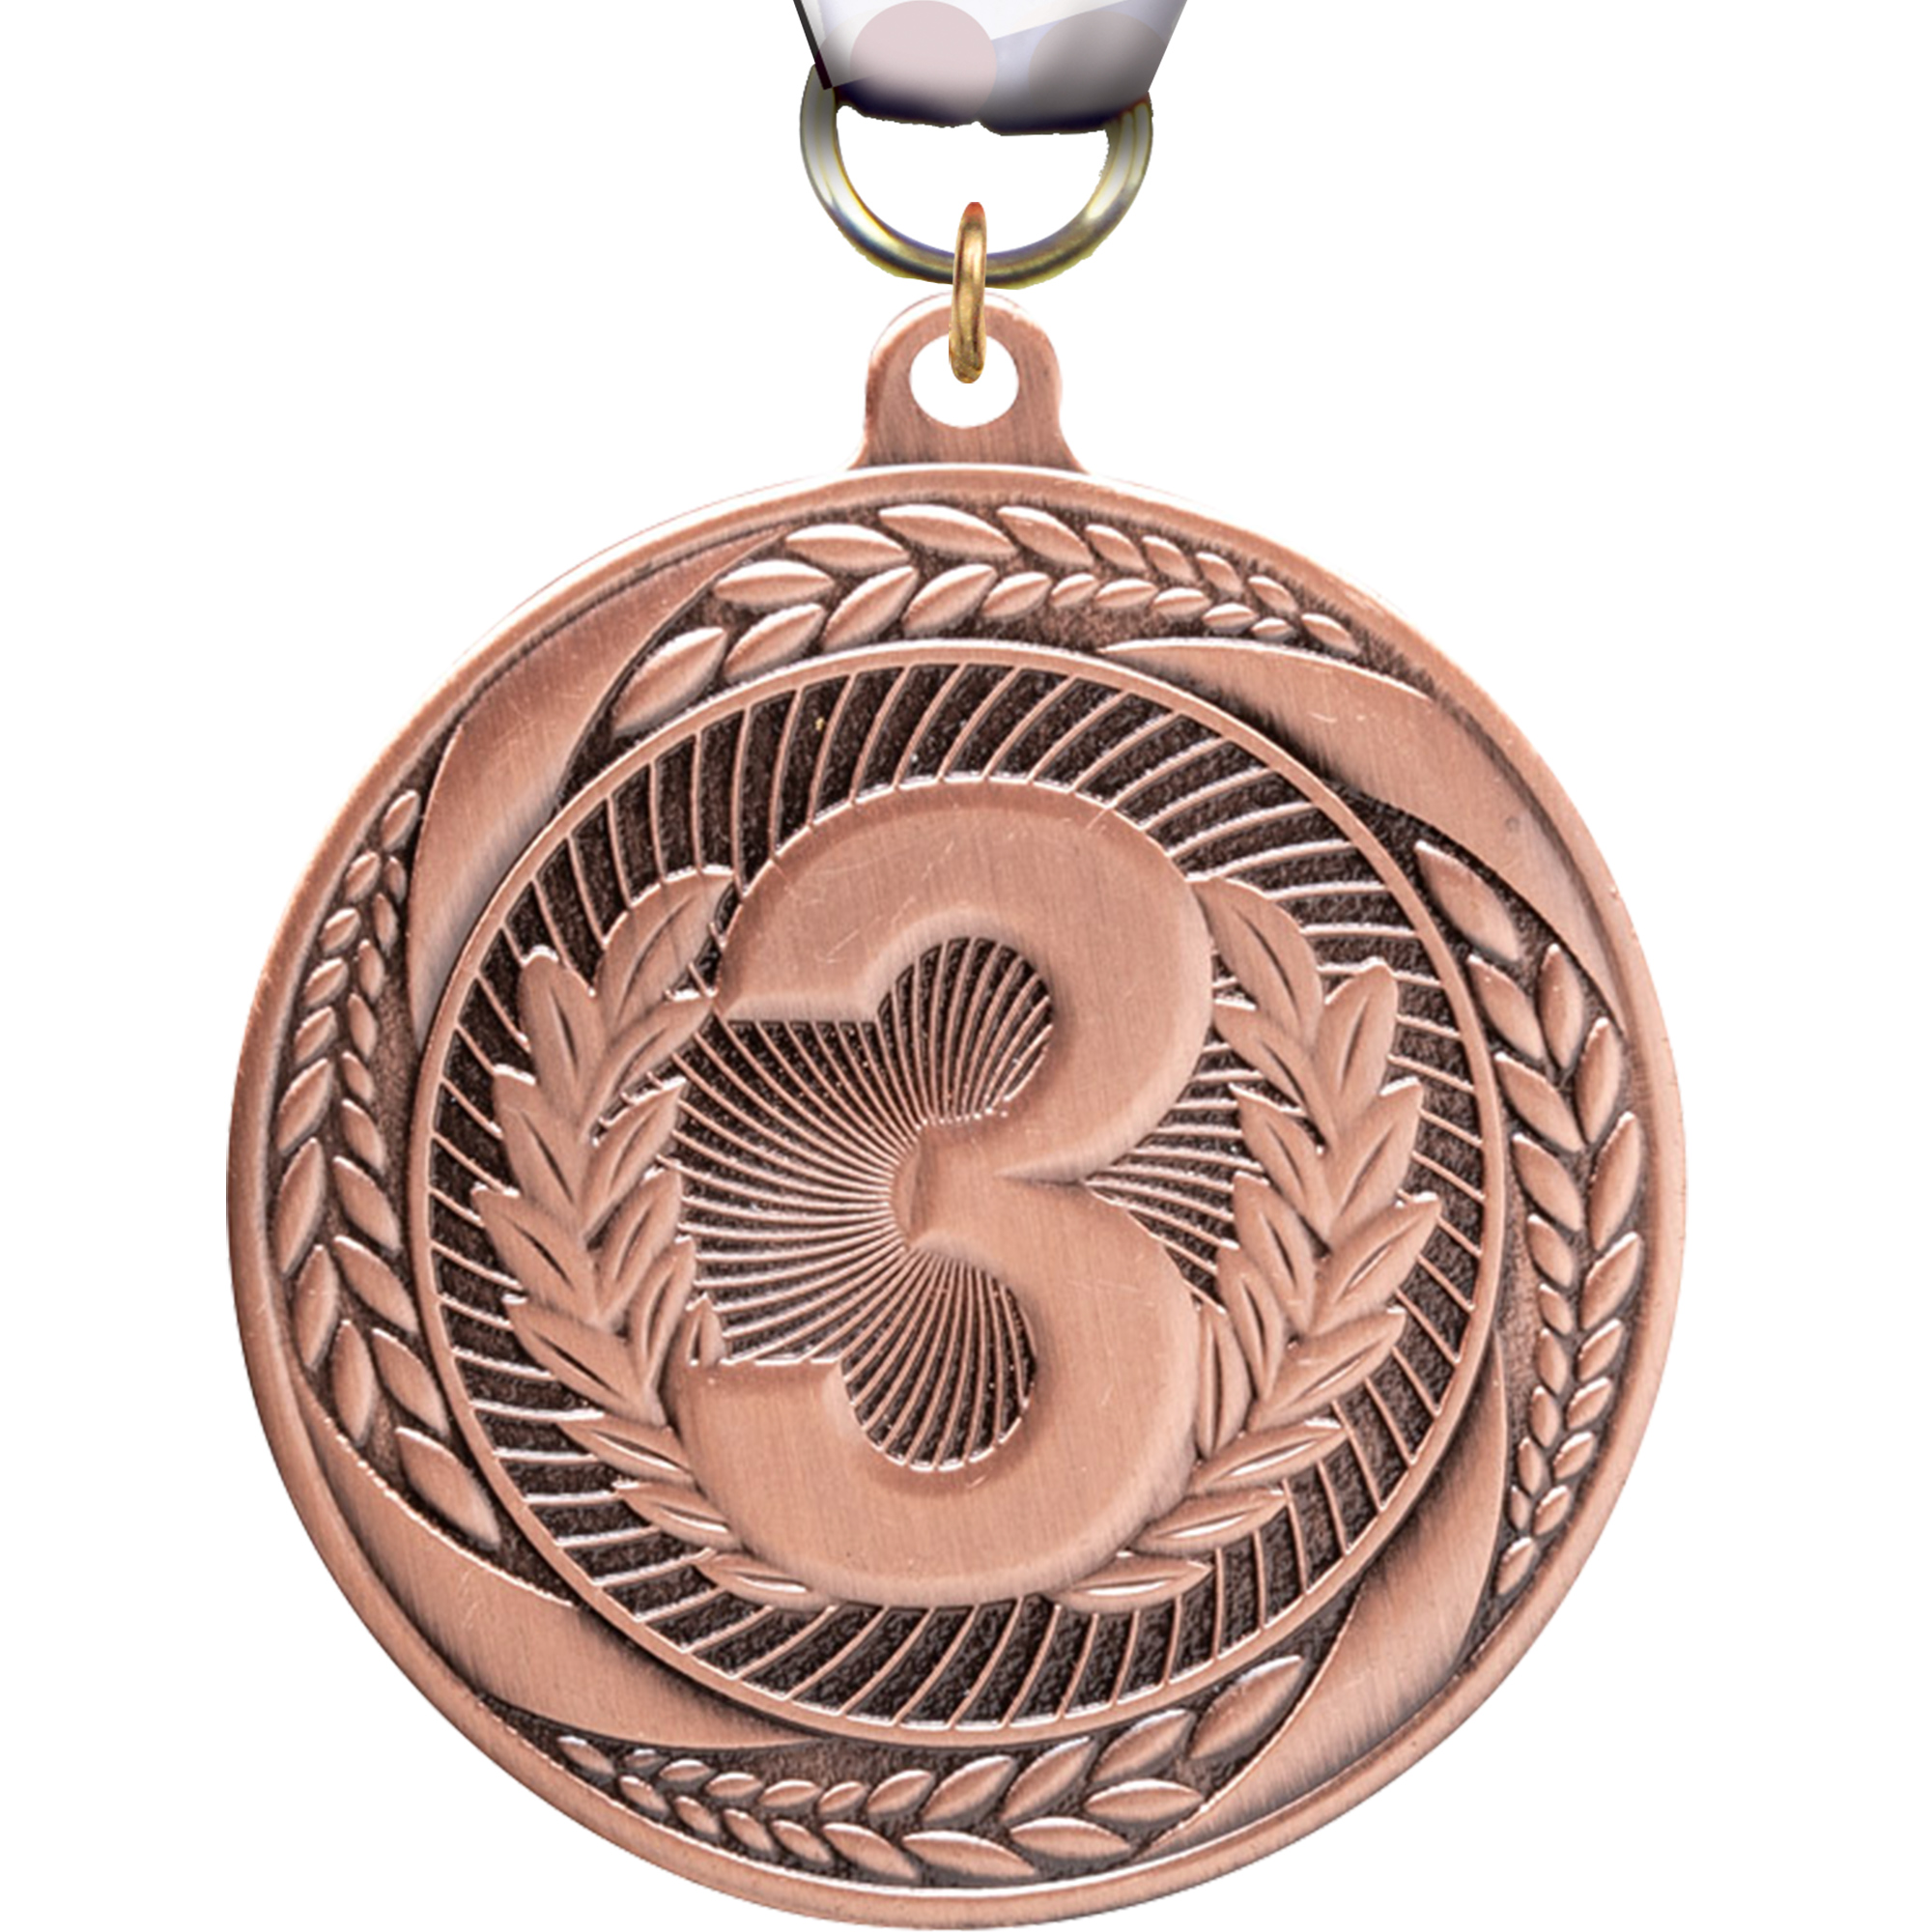 3rd Laurel Wreath Medal